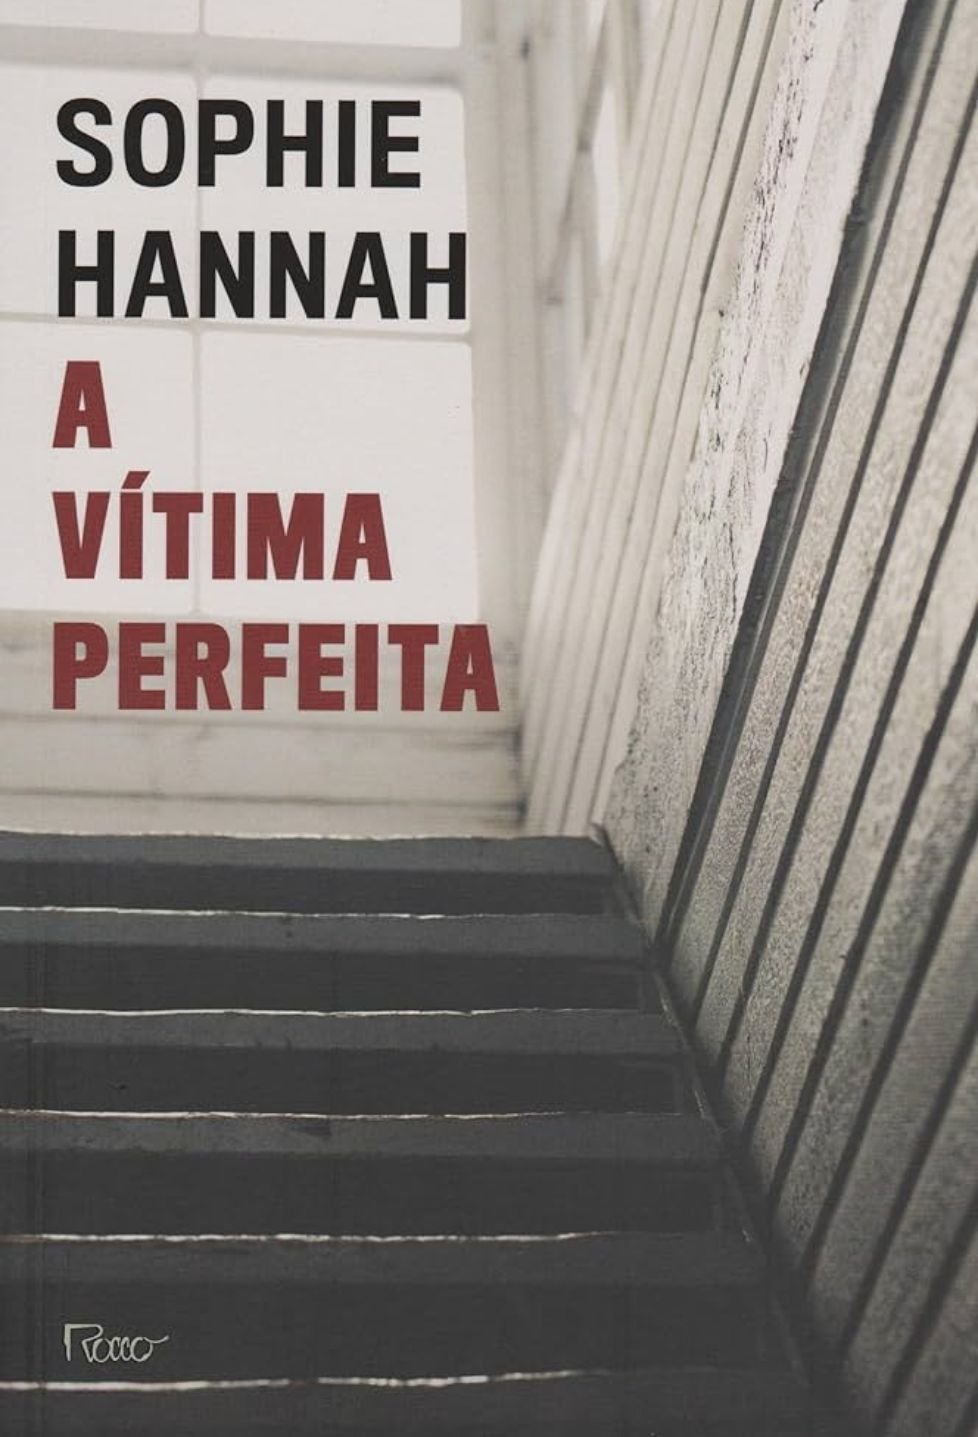 A vítima perfeita pdf Sophie Hannah